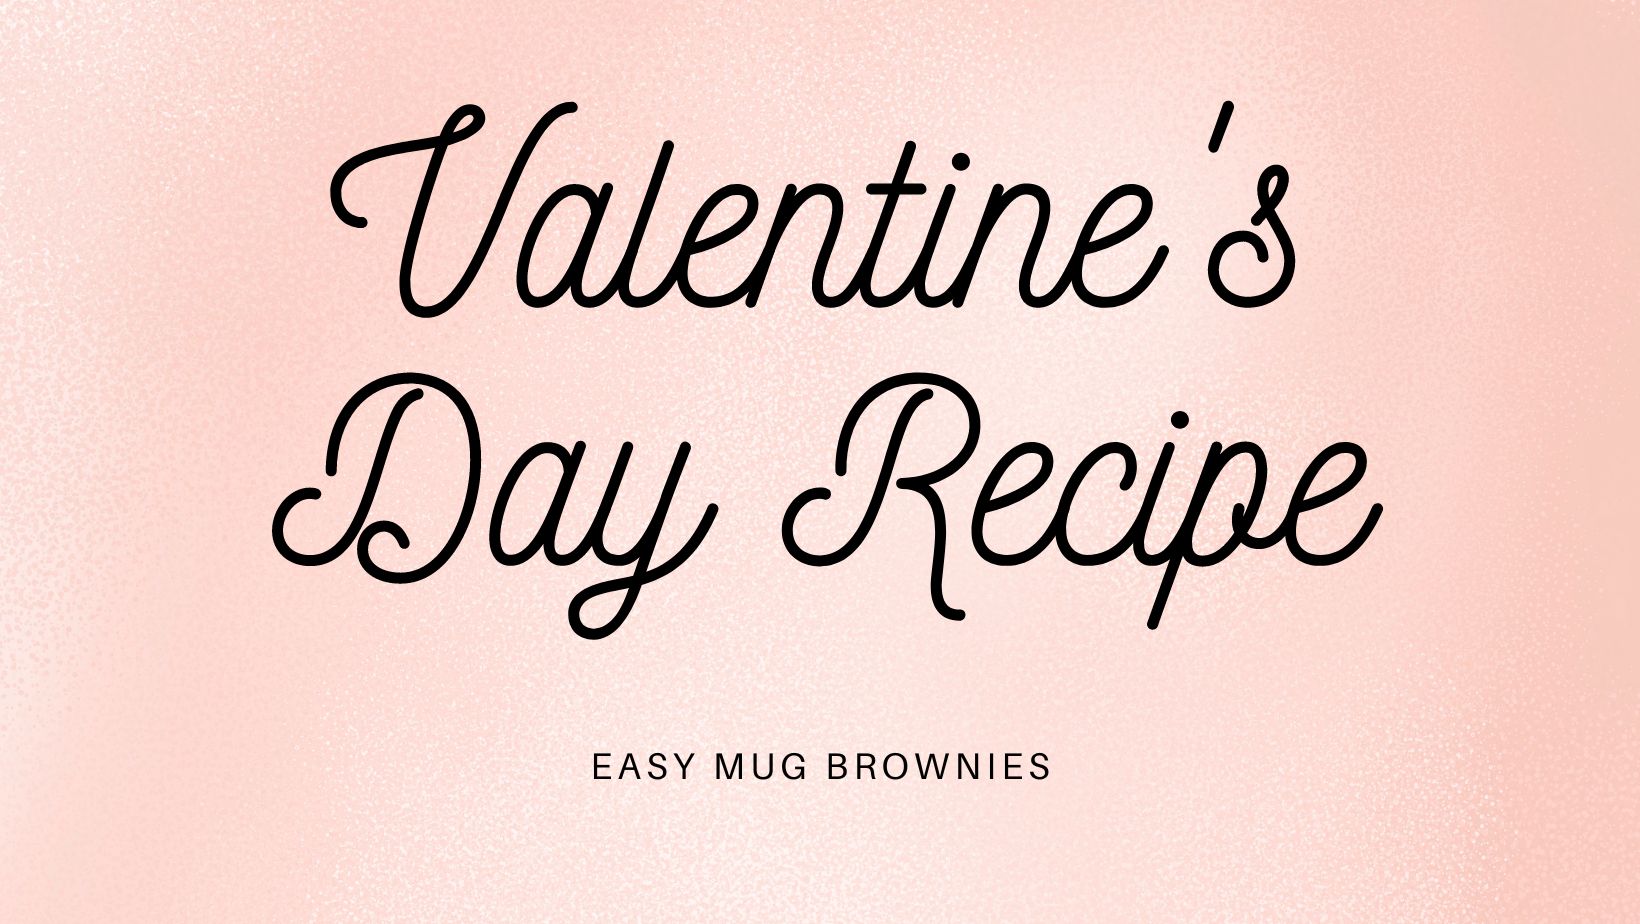 Valentines Day Recipe: Easy Mug Brownies